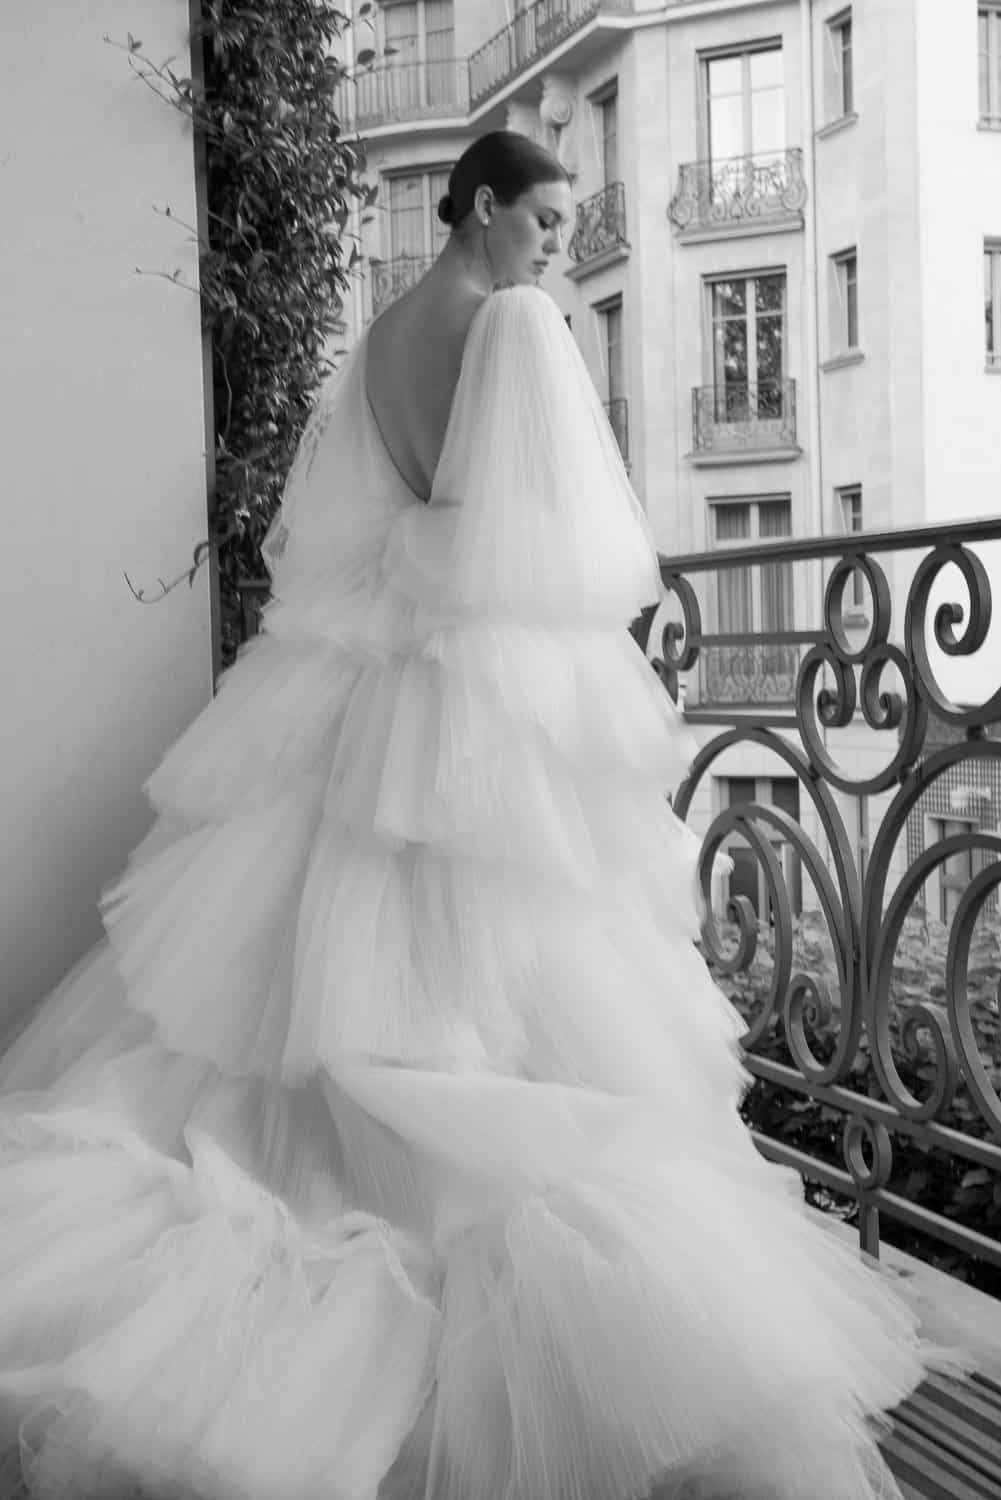 Ritz Paris Luxury Wedding, Ritz Paris Wedding Venue, Ritz Paris Wedding, Paris Wedding Photographer, Theresa Kelly Photography